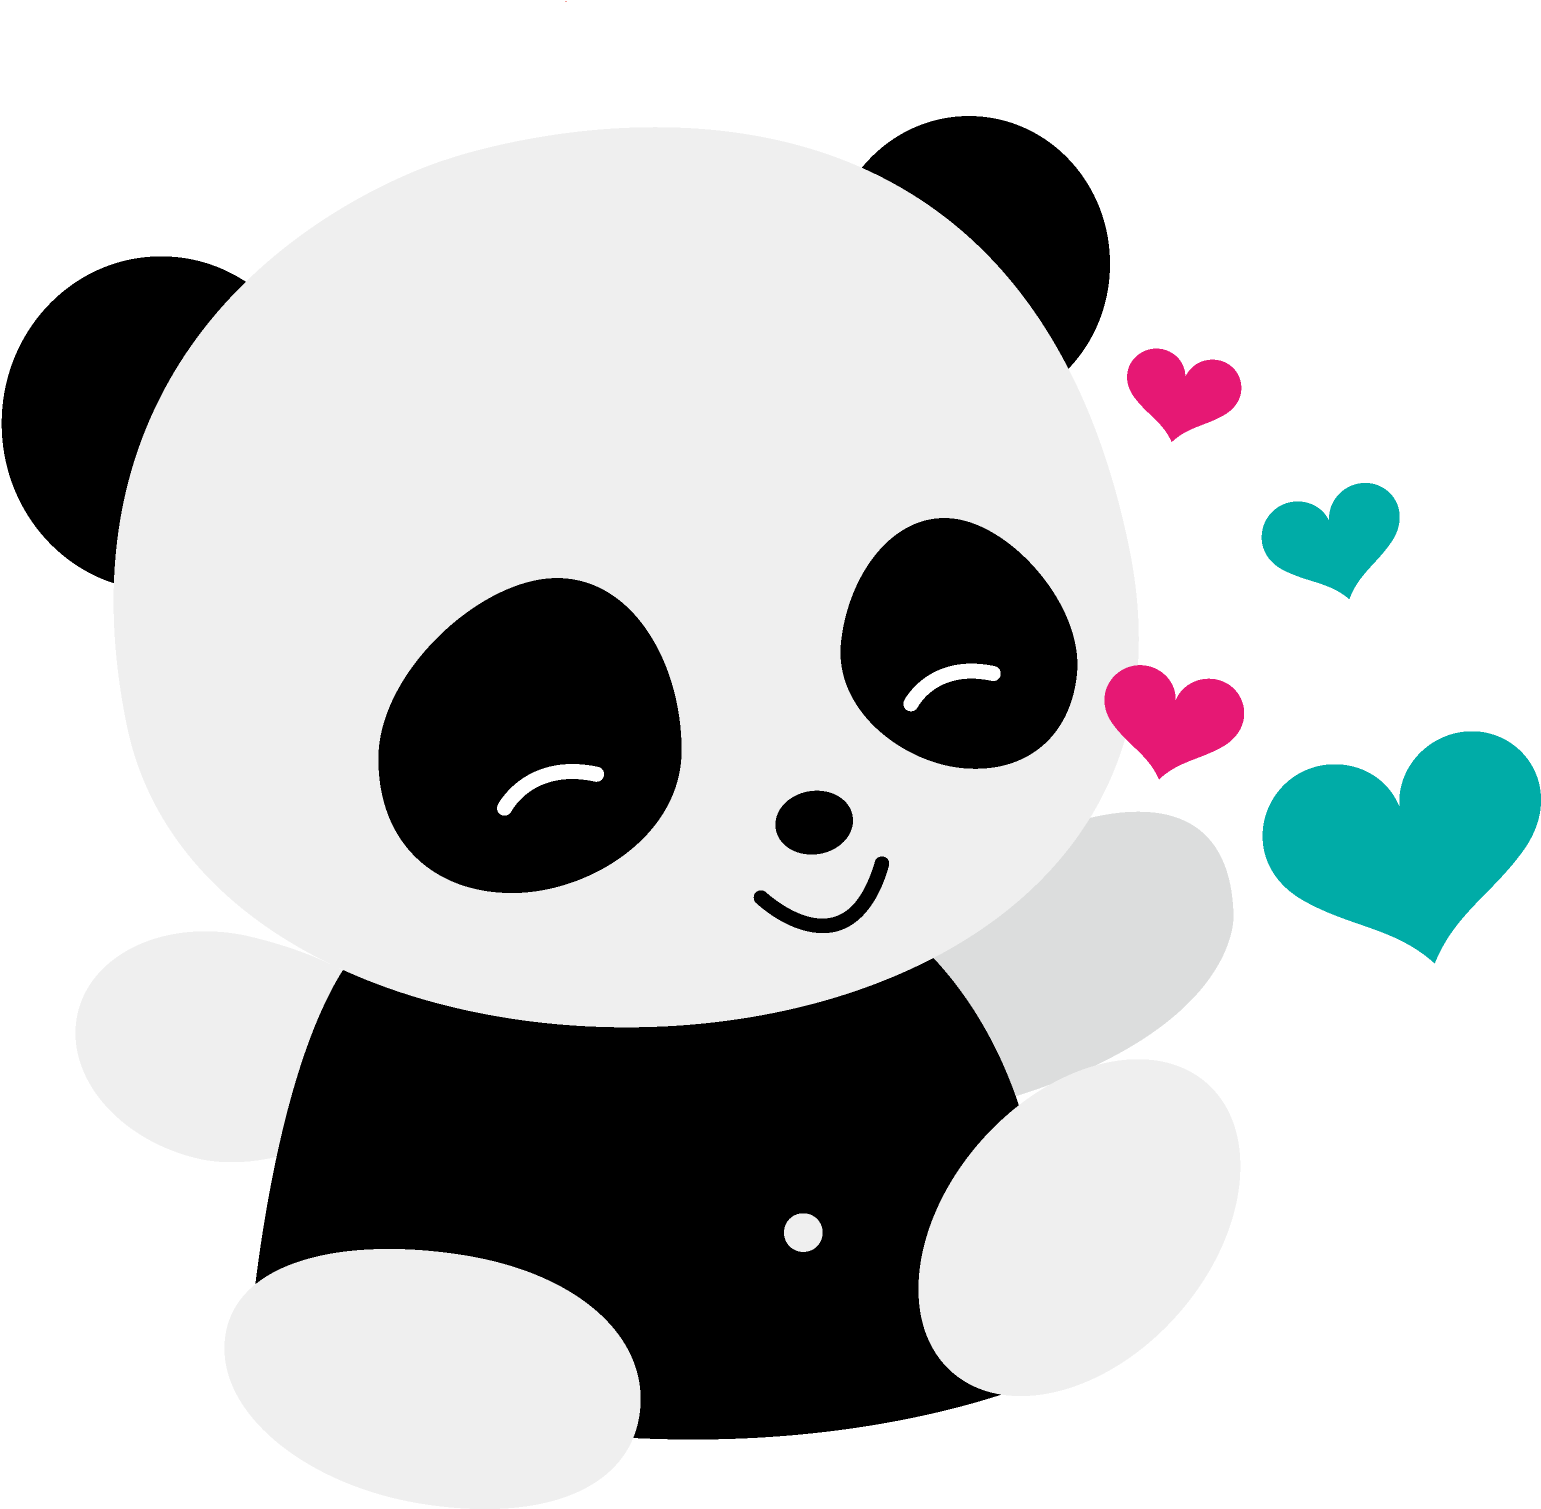 Adorable Cartoon Panda Love Hearts PNG image